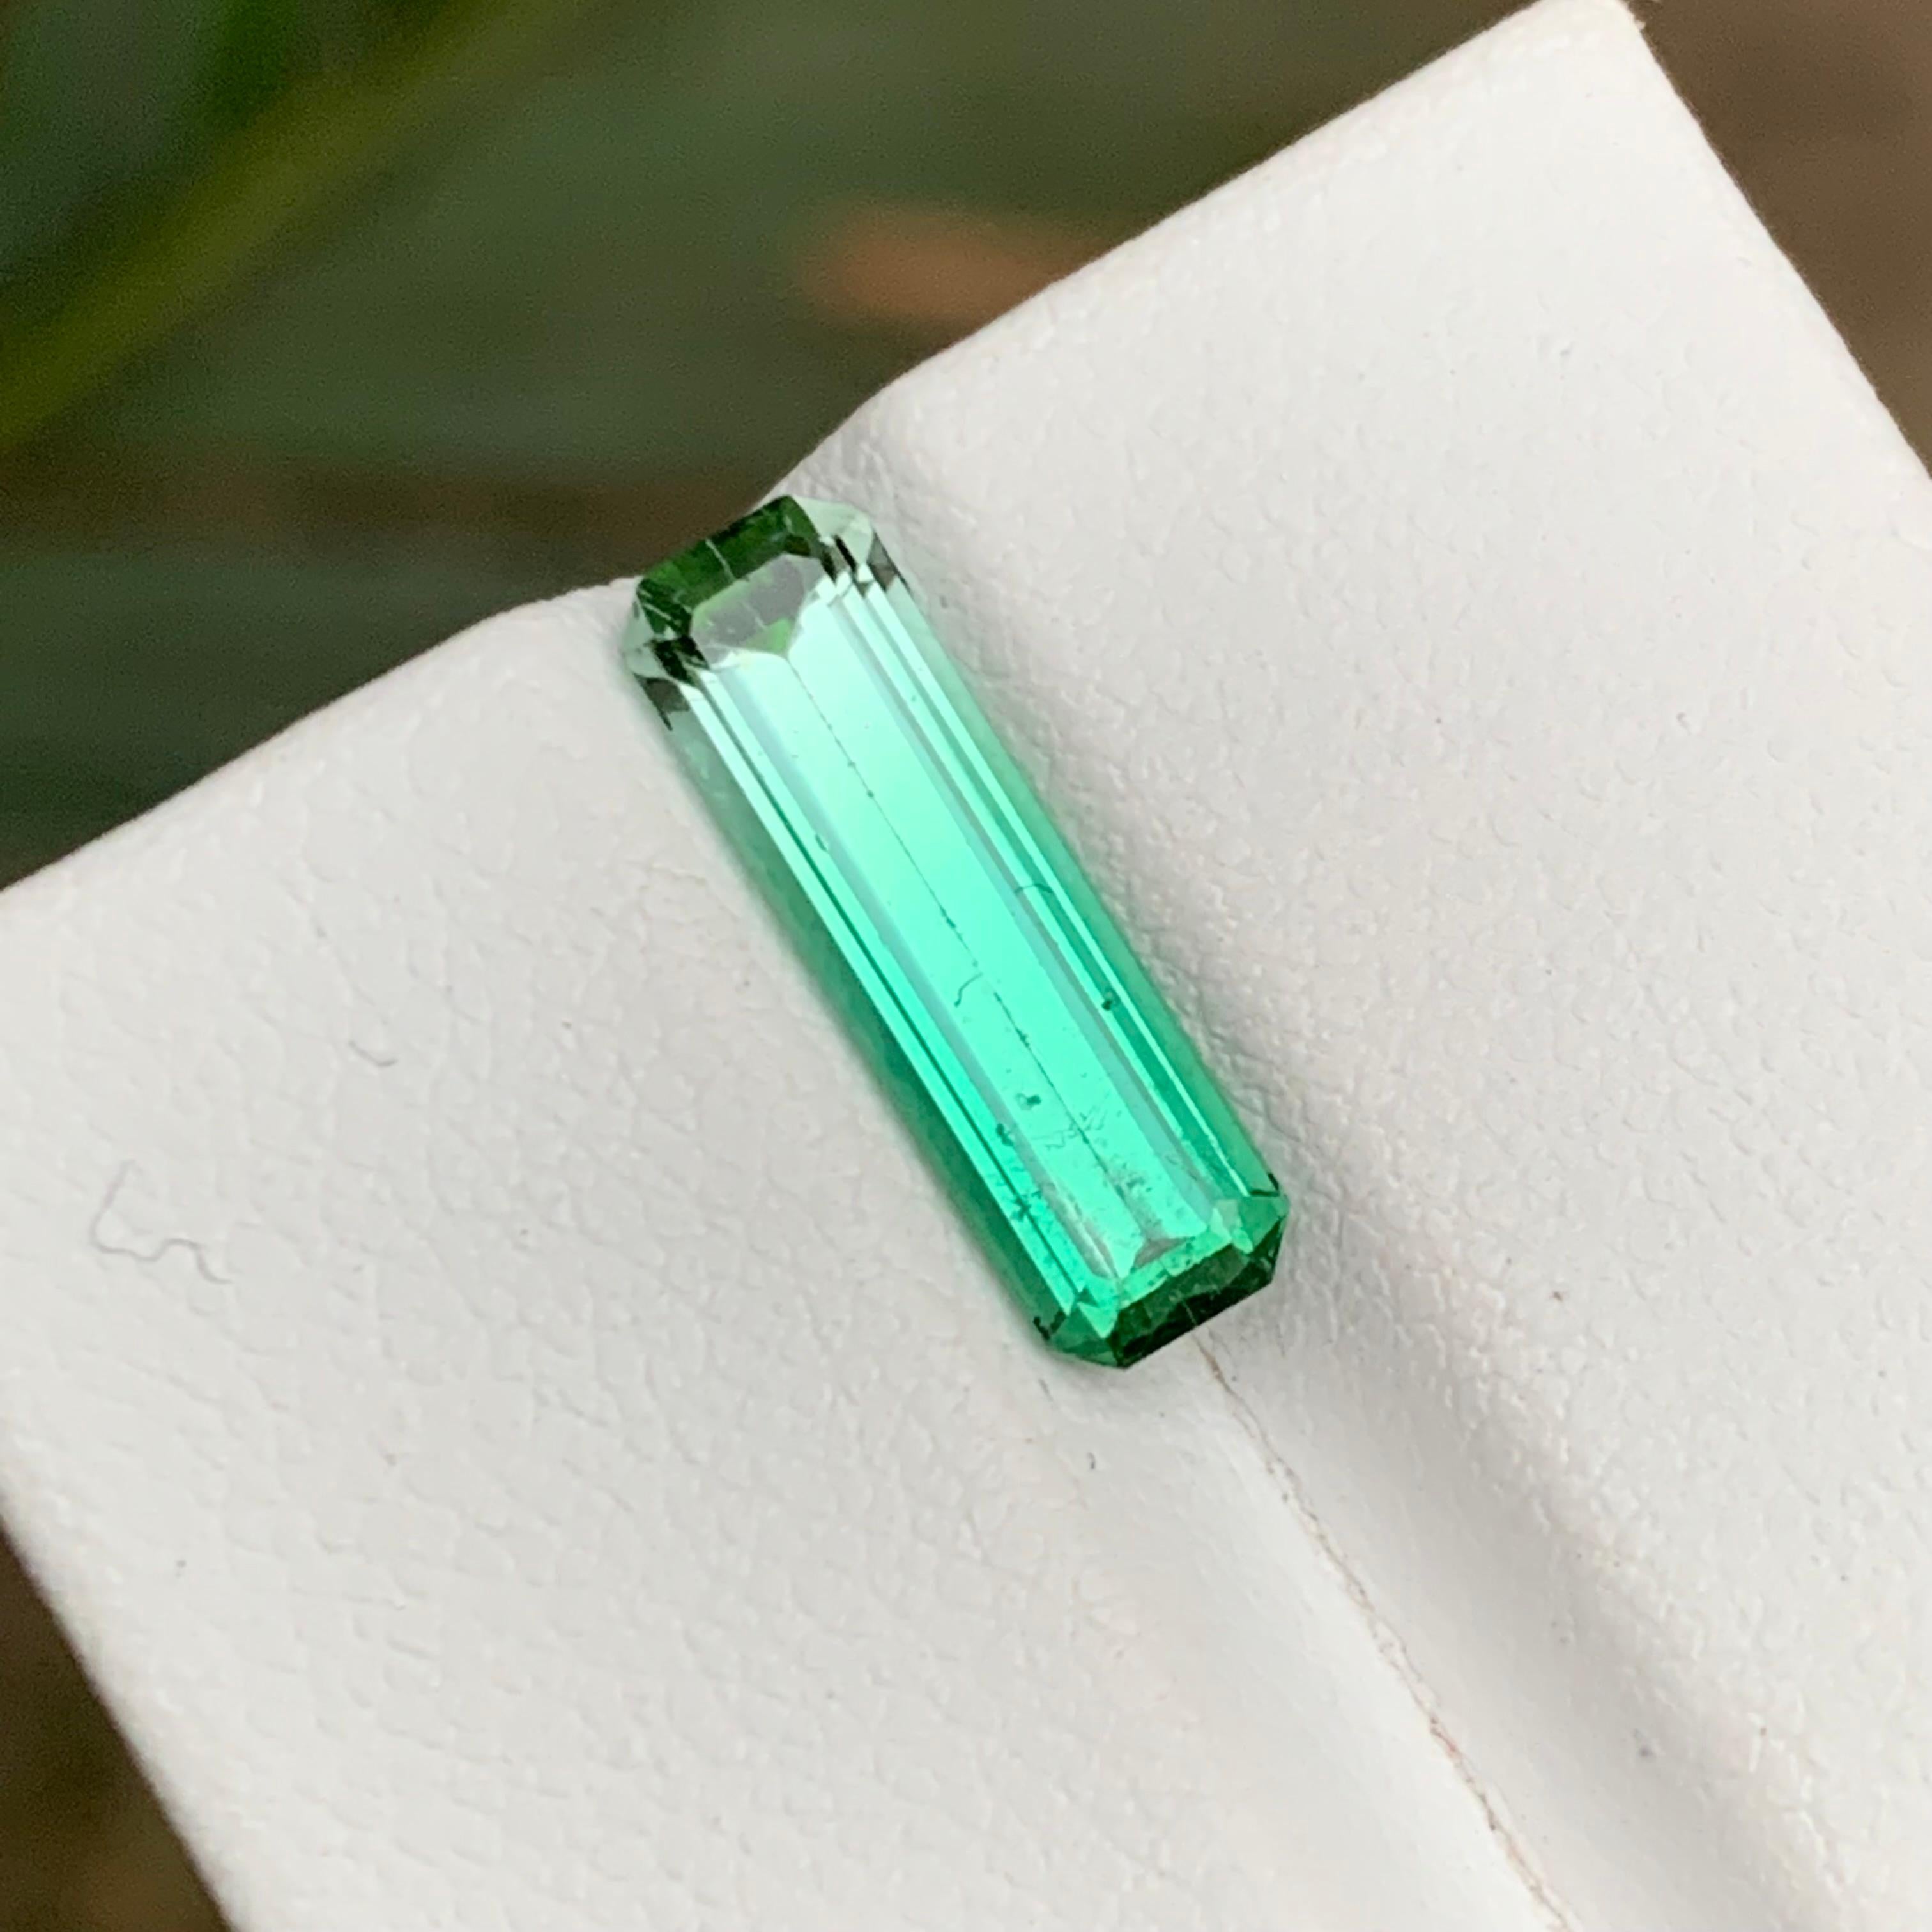 Rare Vivid Bluish Green Bicolor Tourmaline Gemstone 2.85 Ct Emerald Cut for Ring en vente 5